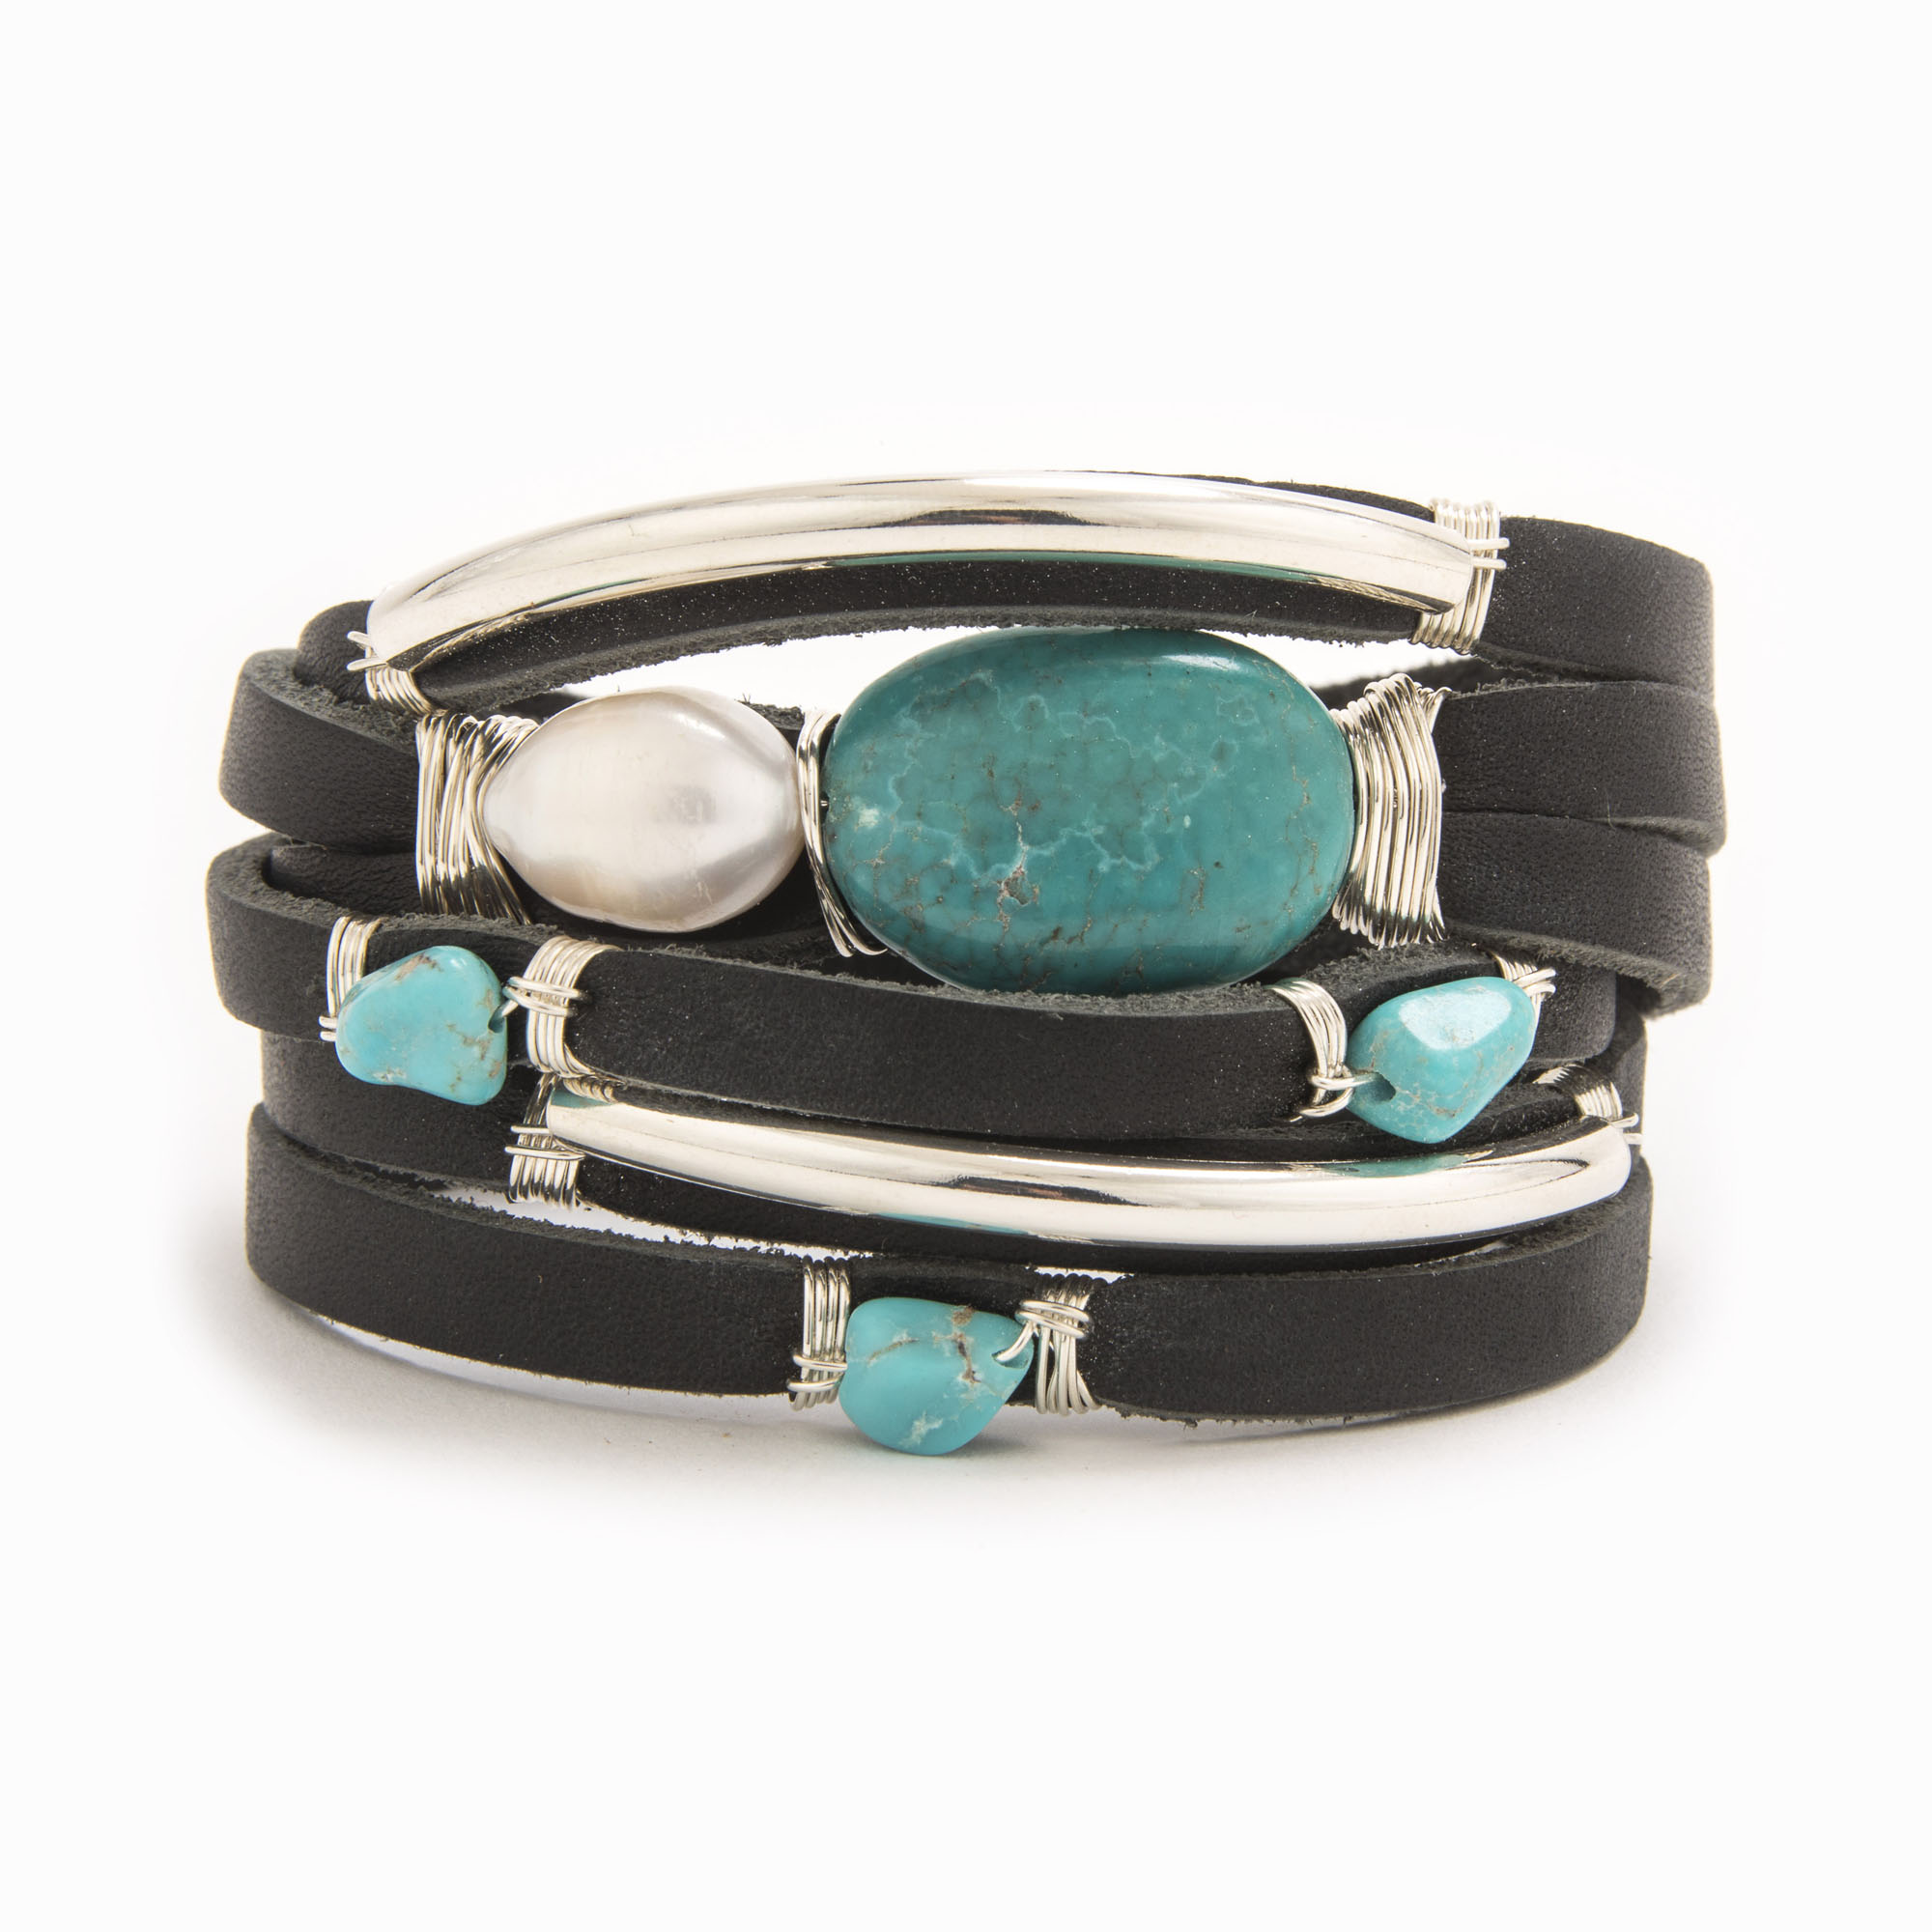 Featured image for “Saber Leather Shred Bracelet”